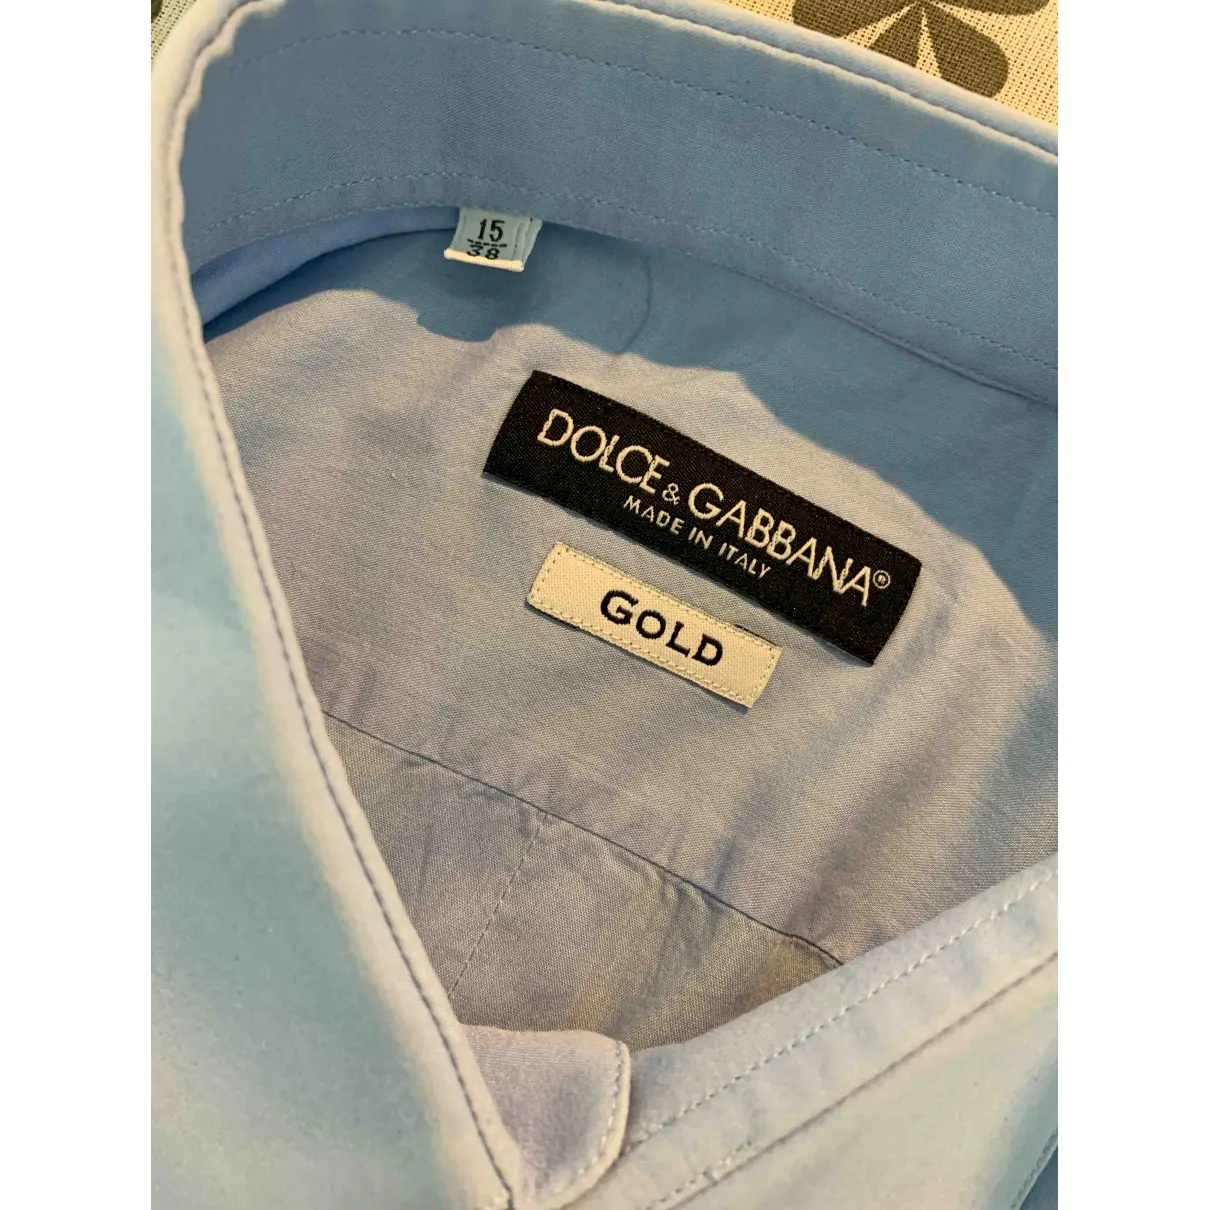 Buy Dolce & Gabbana Shirt online